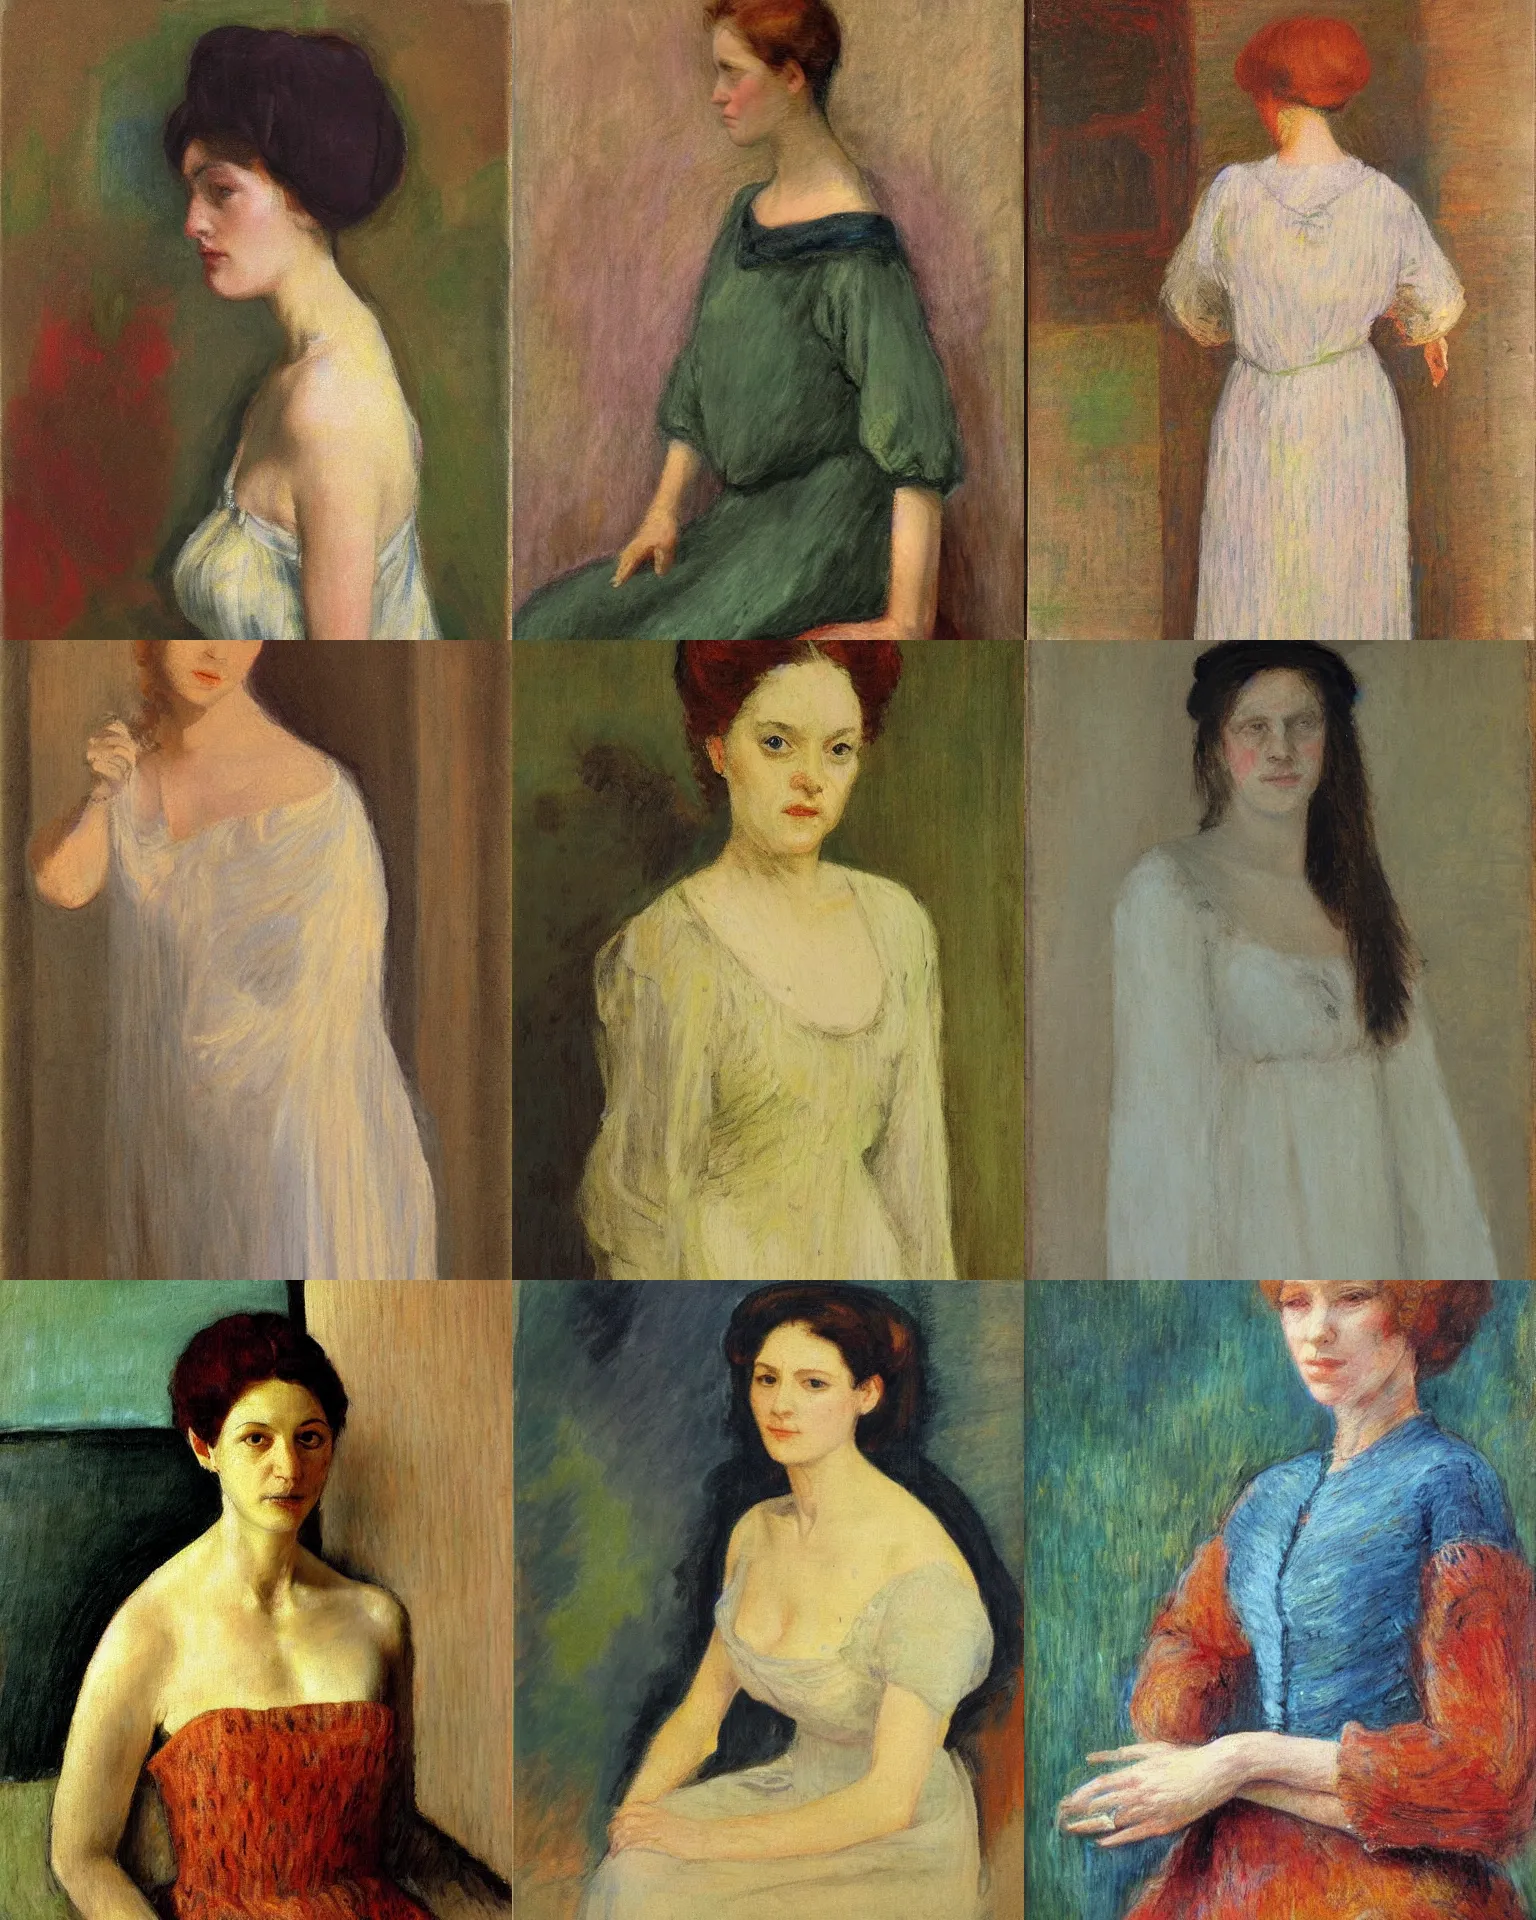 Prompt: woman portrait, female figure in maxi dress, impressionism, surrealism, barocco